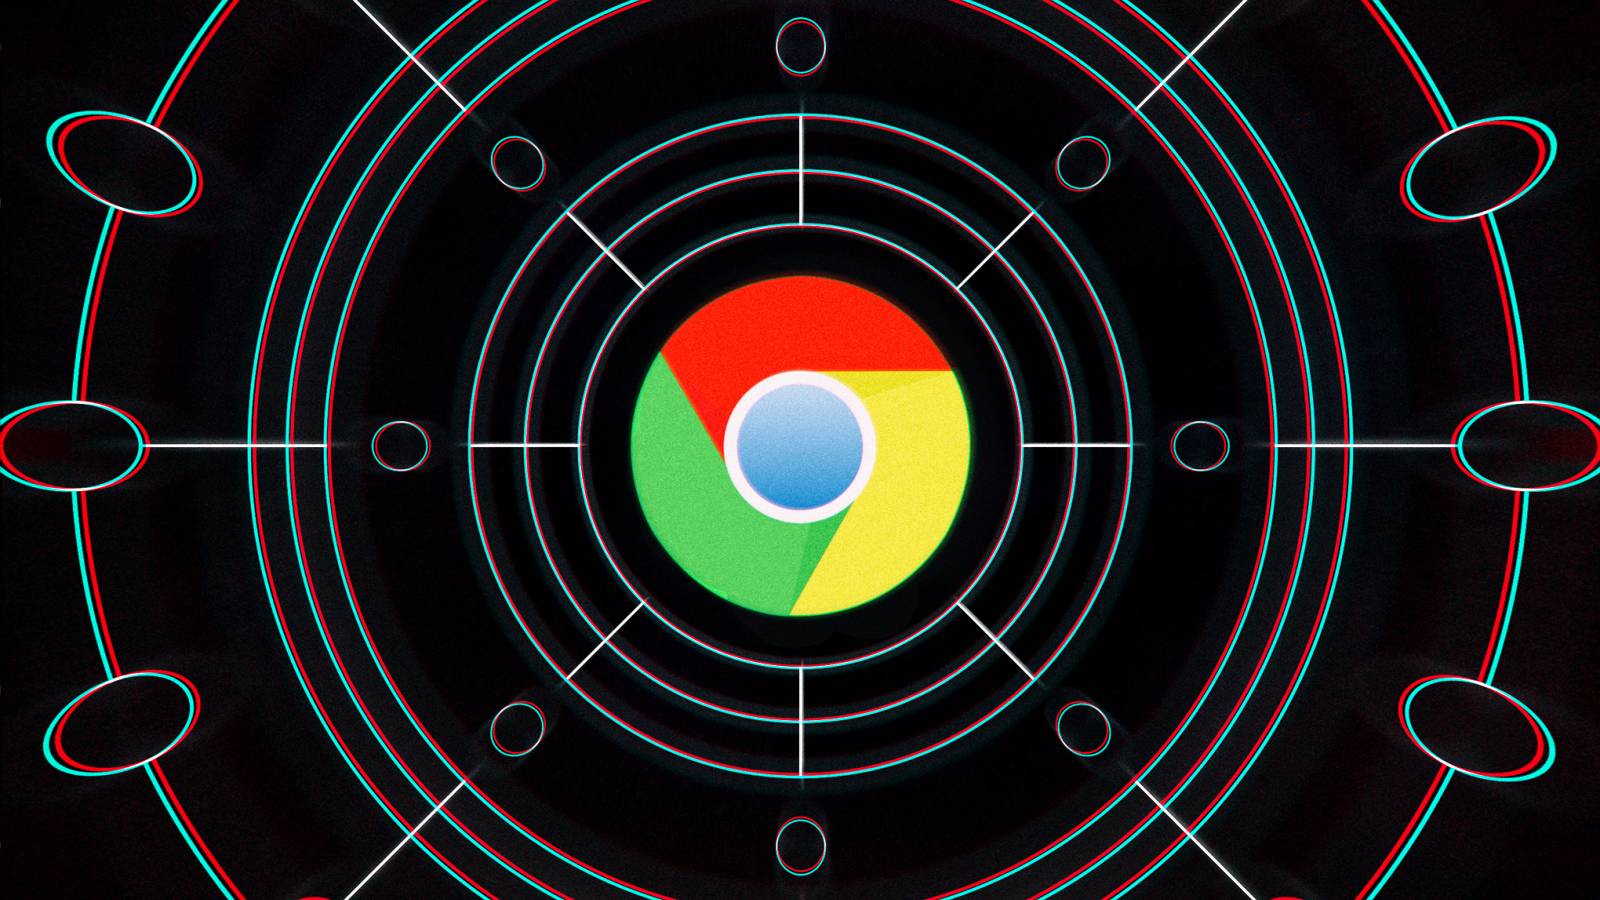 Google Chrome Update Noutati Importante Lansat